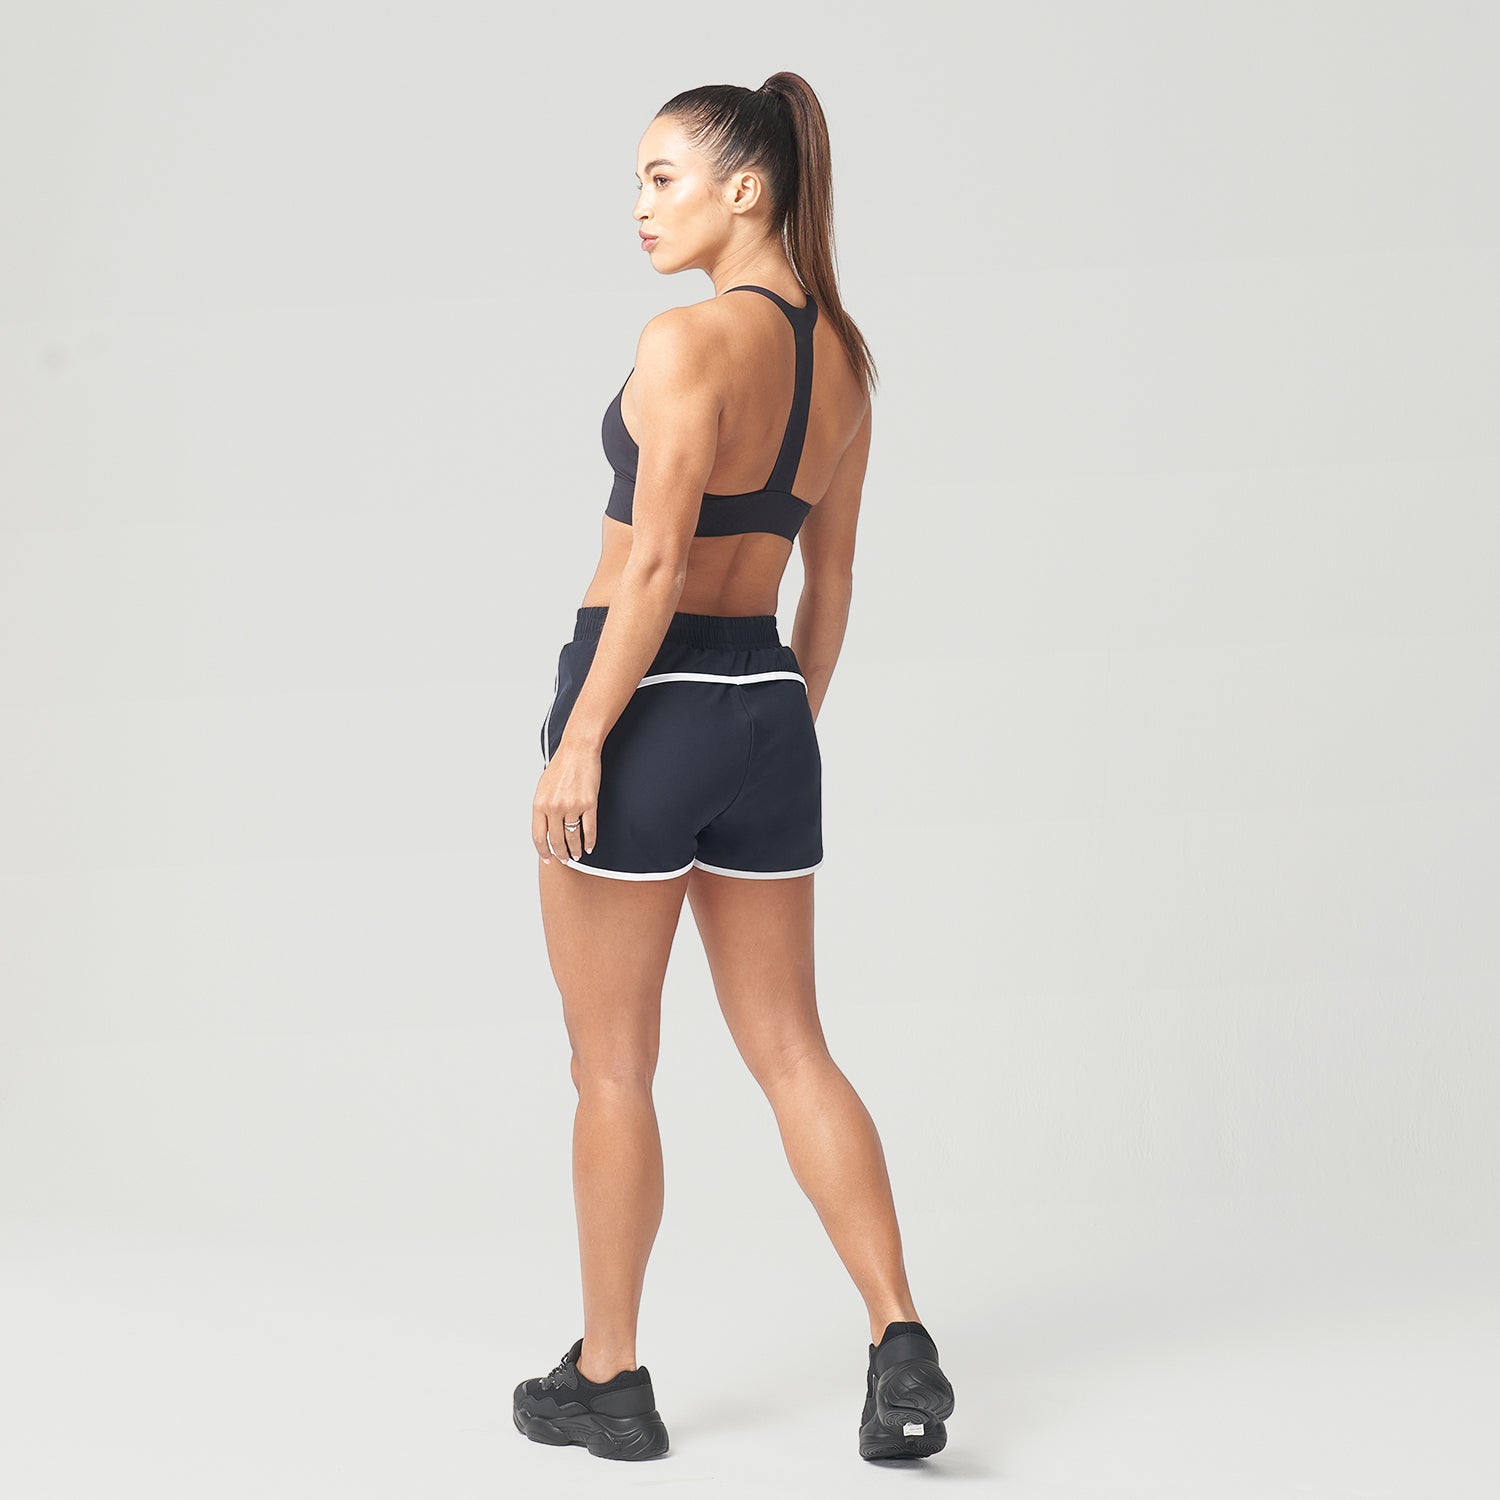 squatwolf-workout-clothes-lab360-y-back-bra-black-sports-bra-for-gym